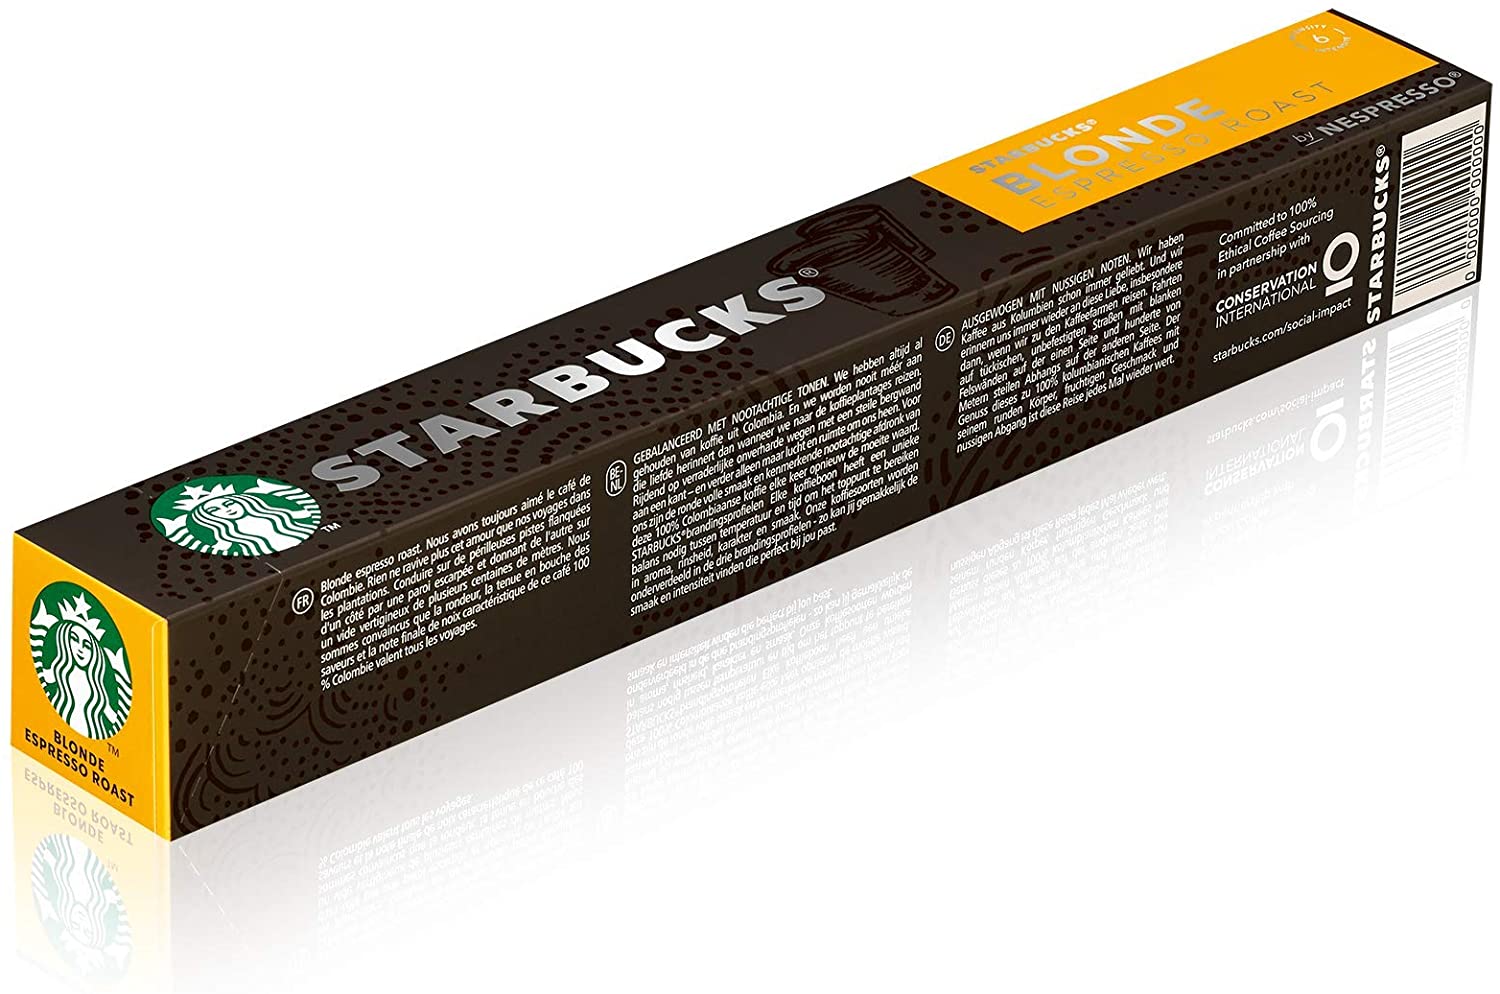 Starbucks® Blonde Espresso Roast by Nespresso® 36 cápsulas